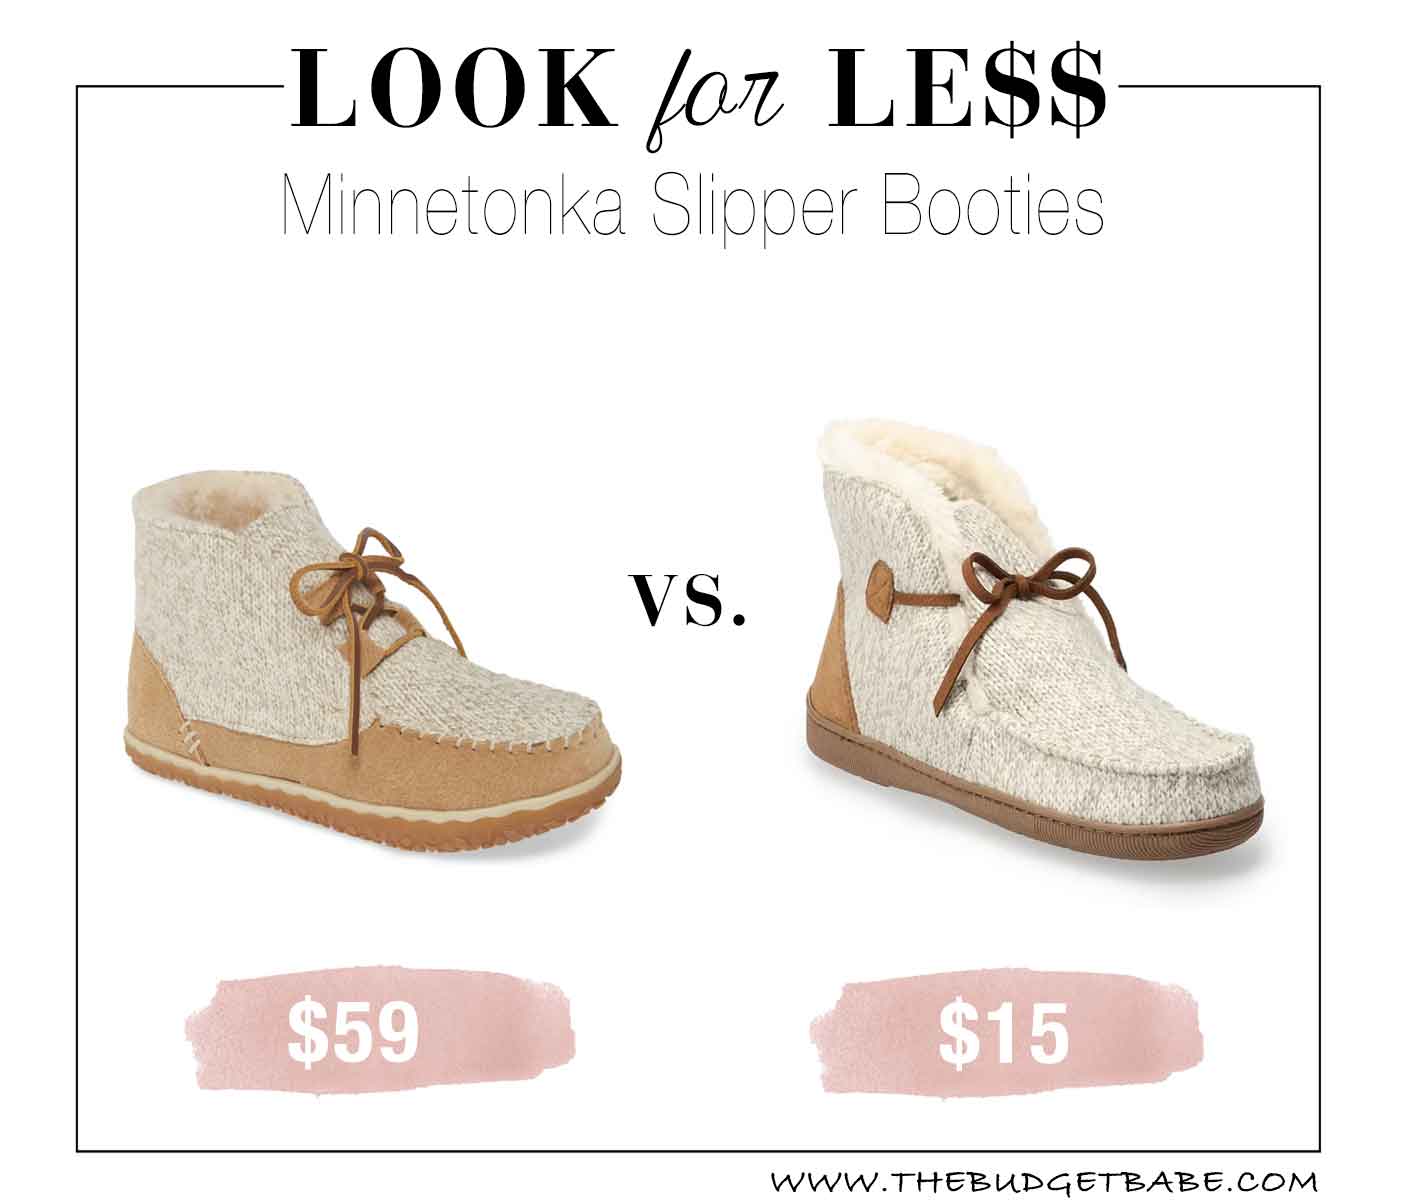 Minnetonka slipper booties make a great gift!